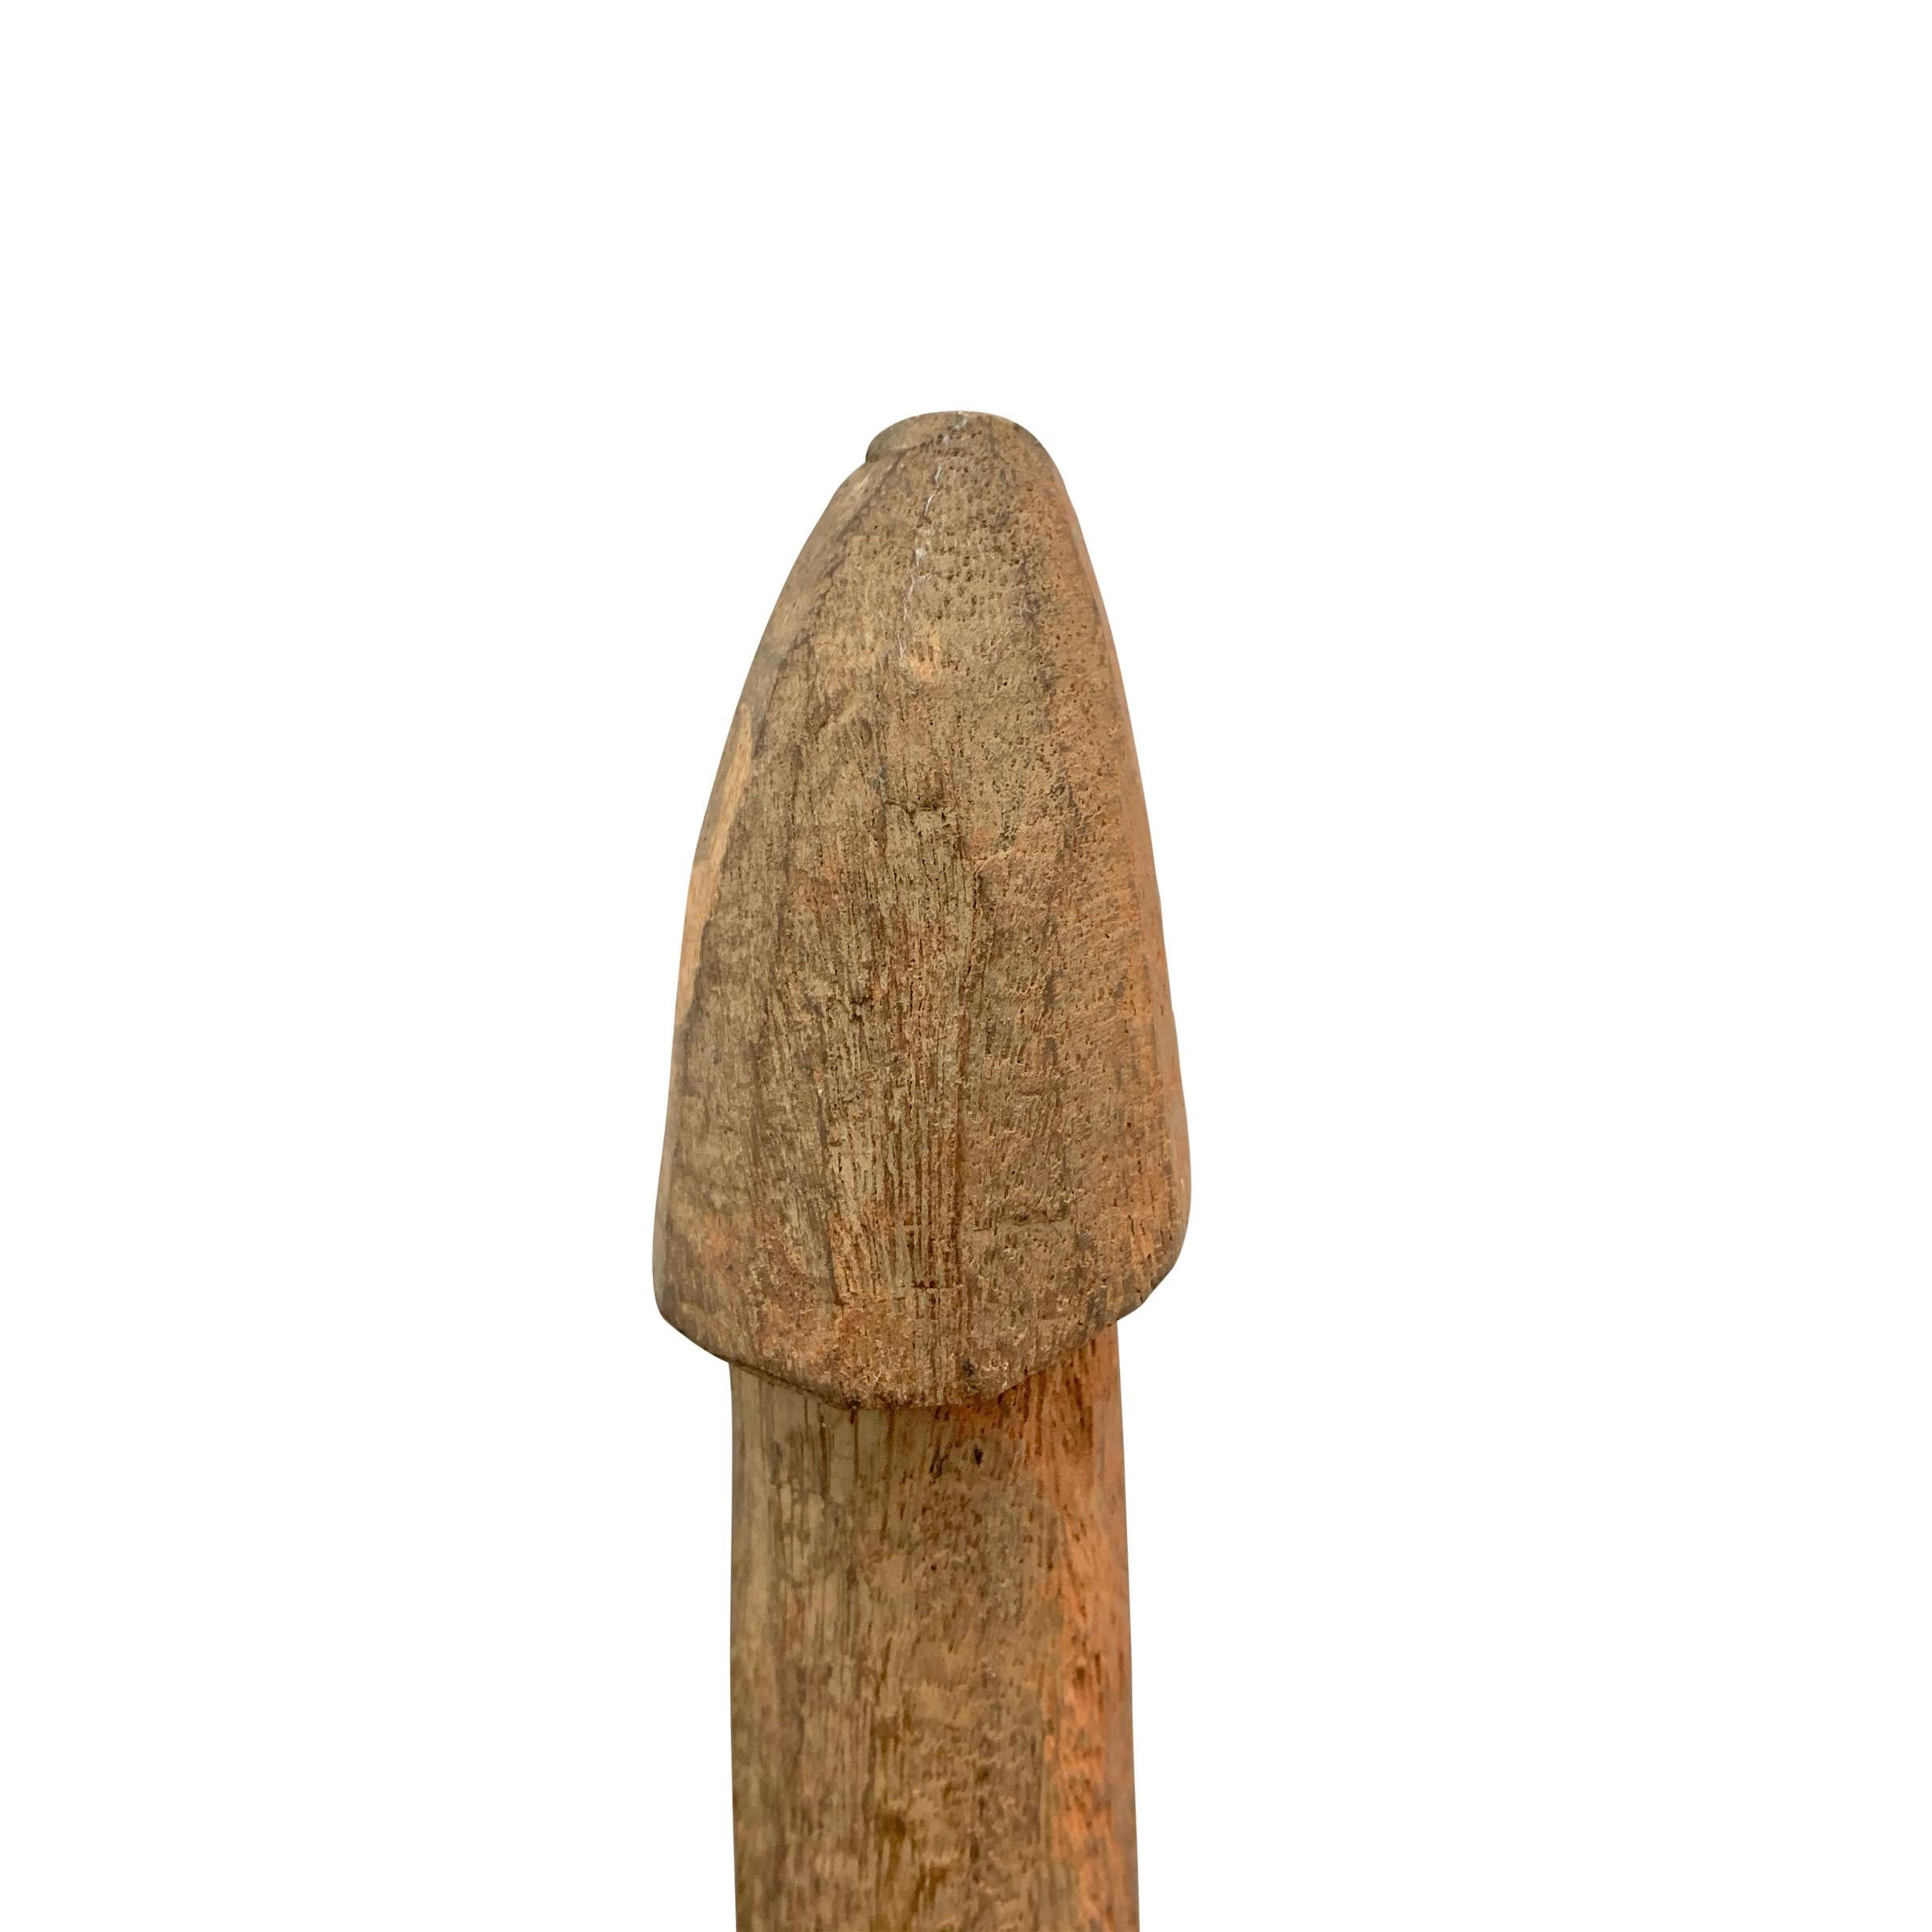 Wooden Fertility Figure (Handgeschnitzt)